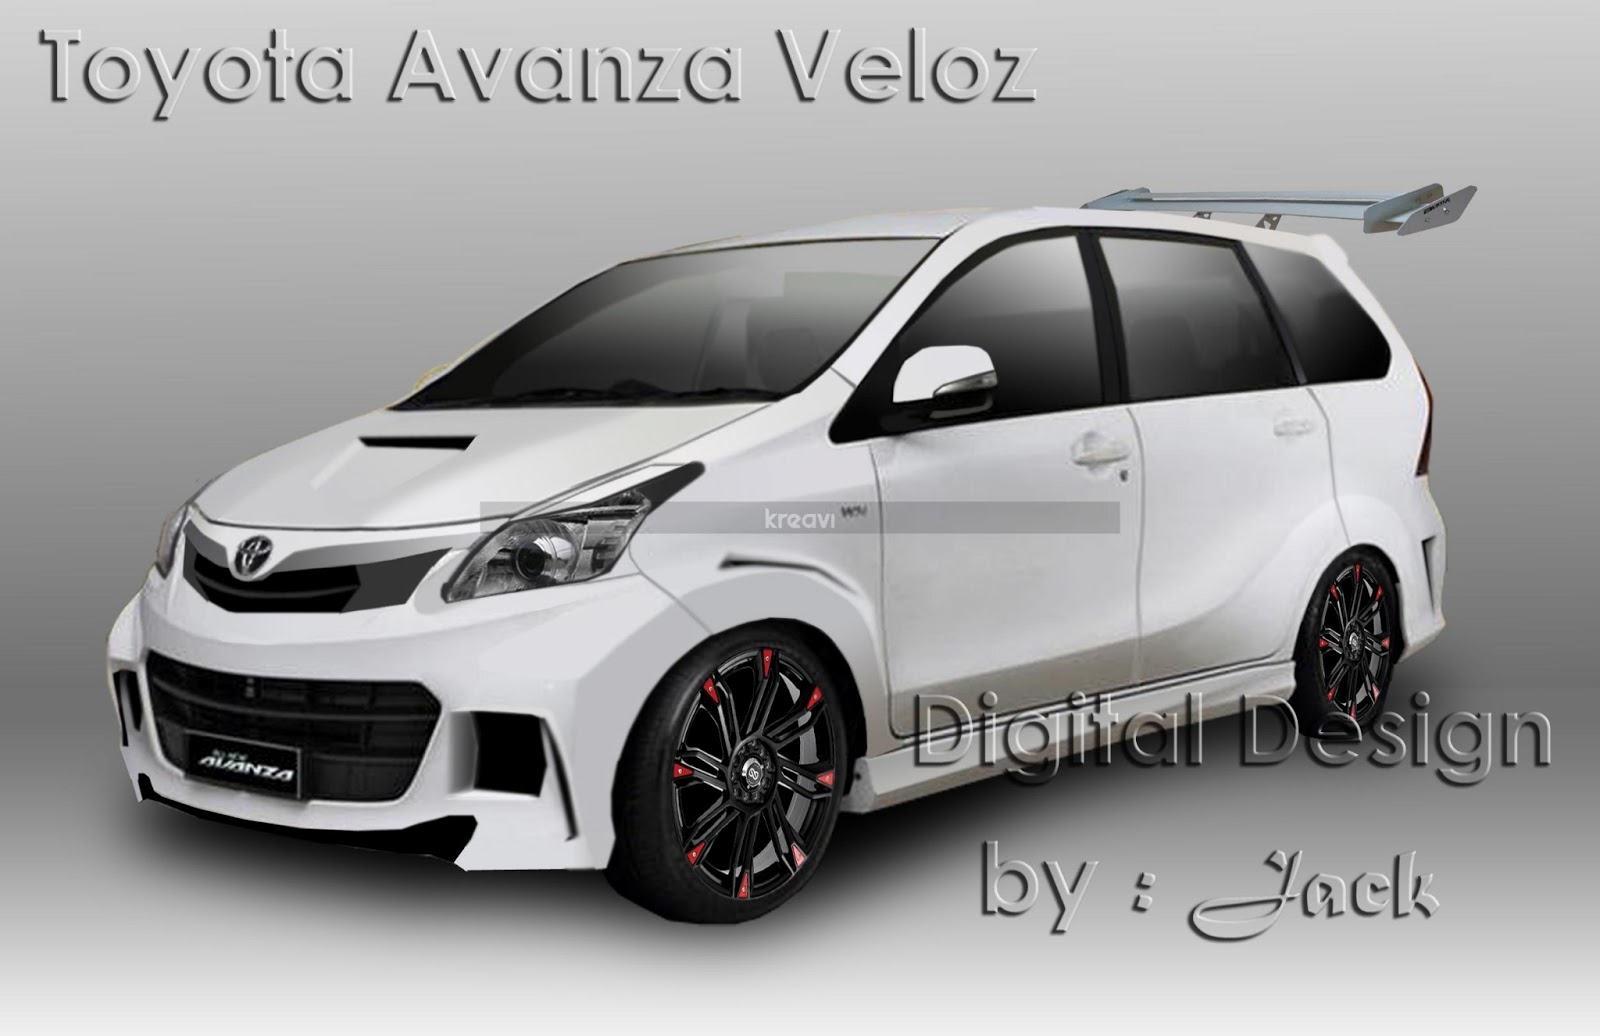 hargamobil: Harga Toyota Avanza Veloz baru The Road Jakarta dan sekitarnya